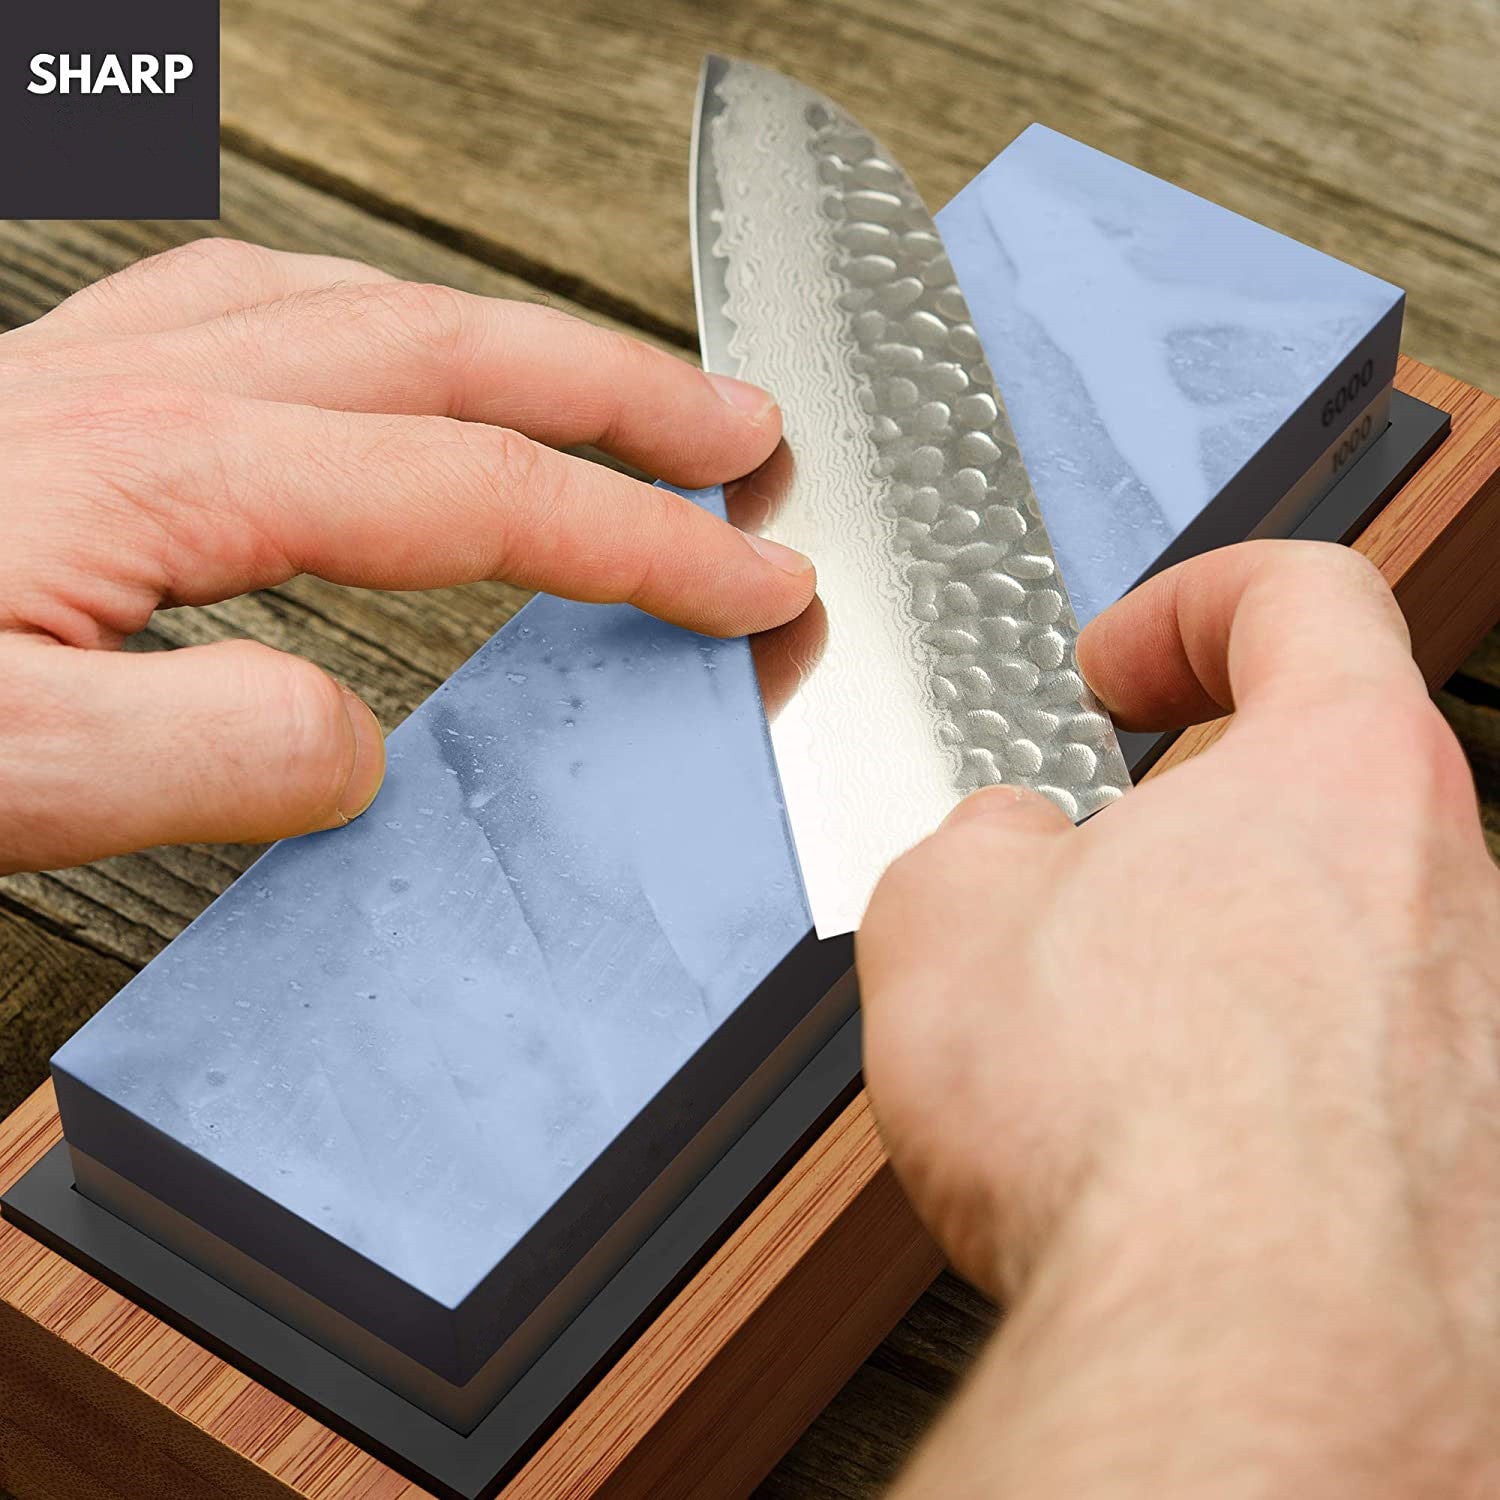 Sharp Pebble Whetstone 1000/6000: A Simple Sharpening Set